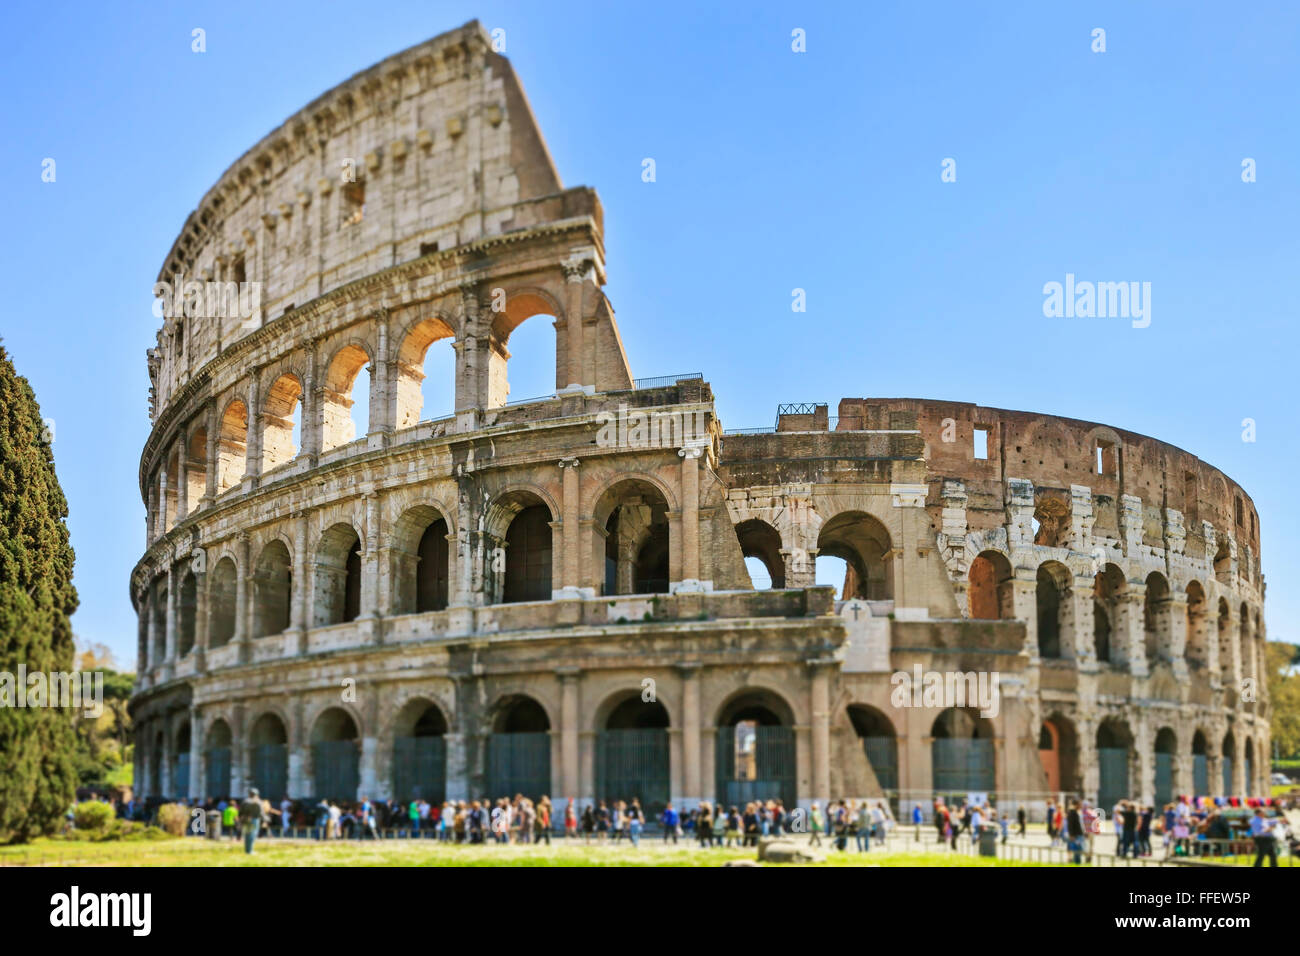 Roman Colosseum architecture landmark in a tilt shift photography. Rome, Italy Stock Photo